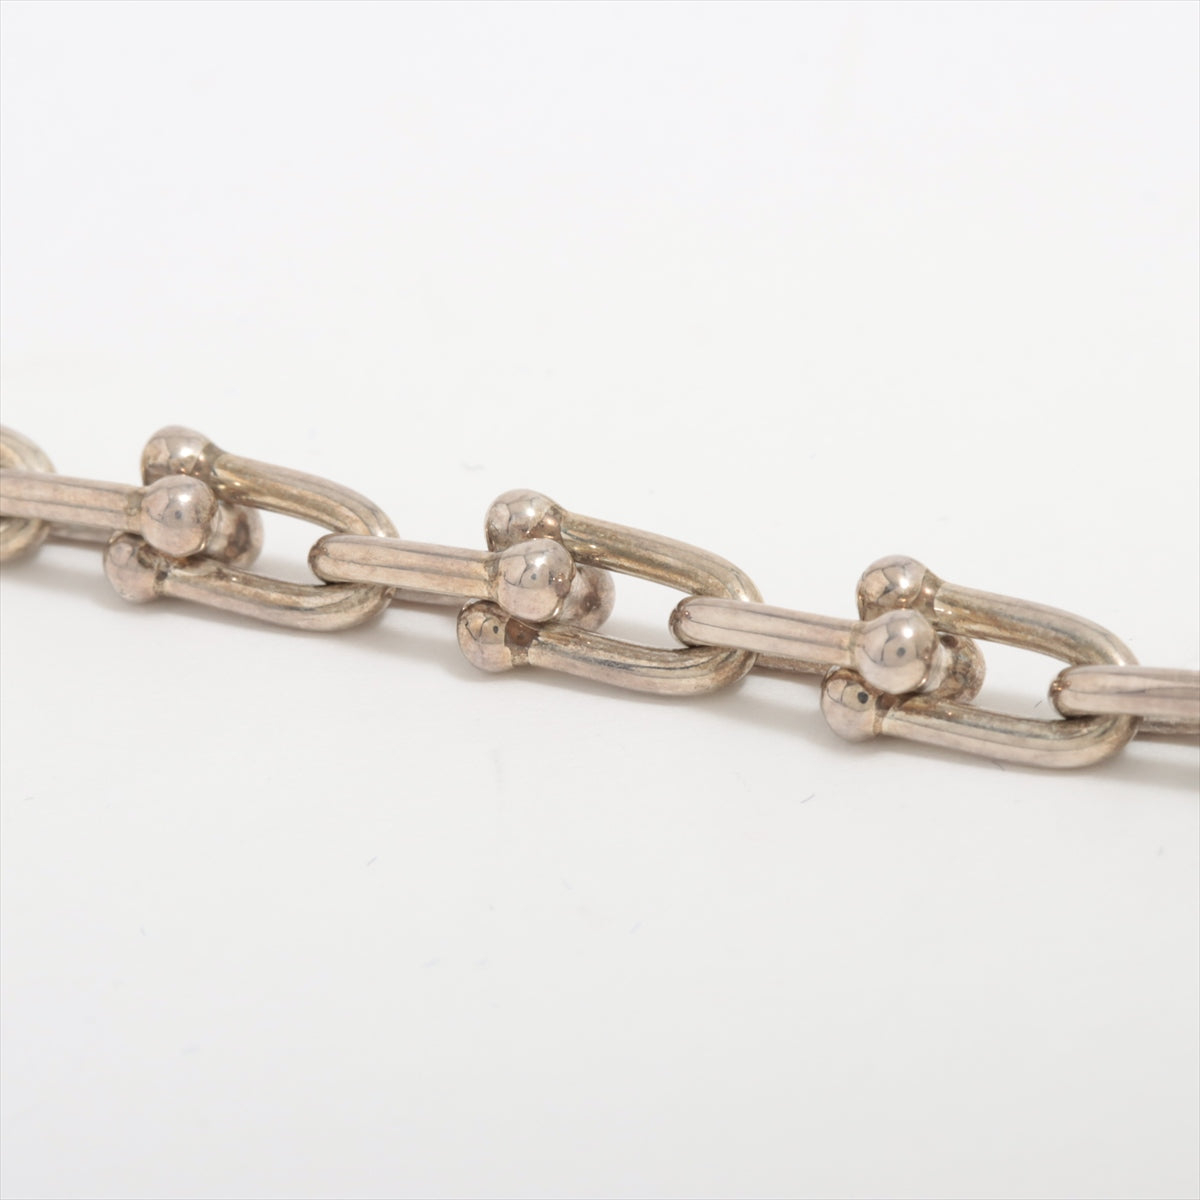 Tiffany Hardware small rink Bracelet 925 16.5g Silver